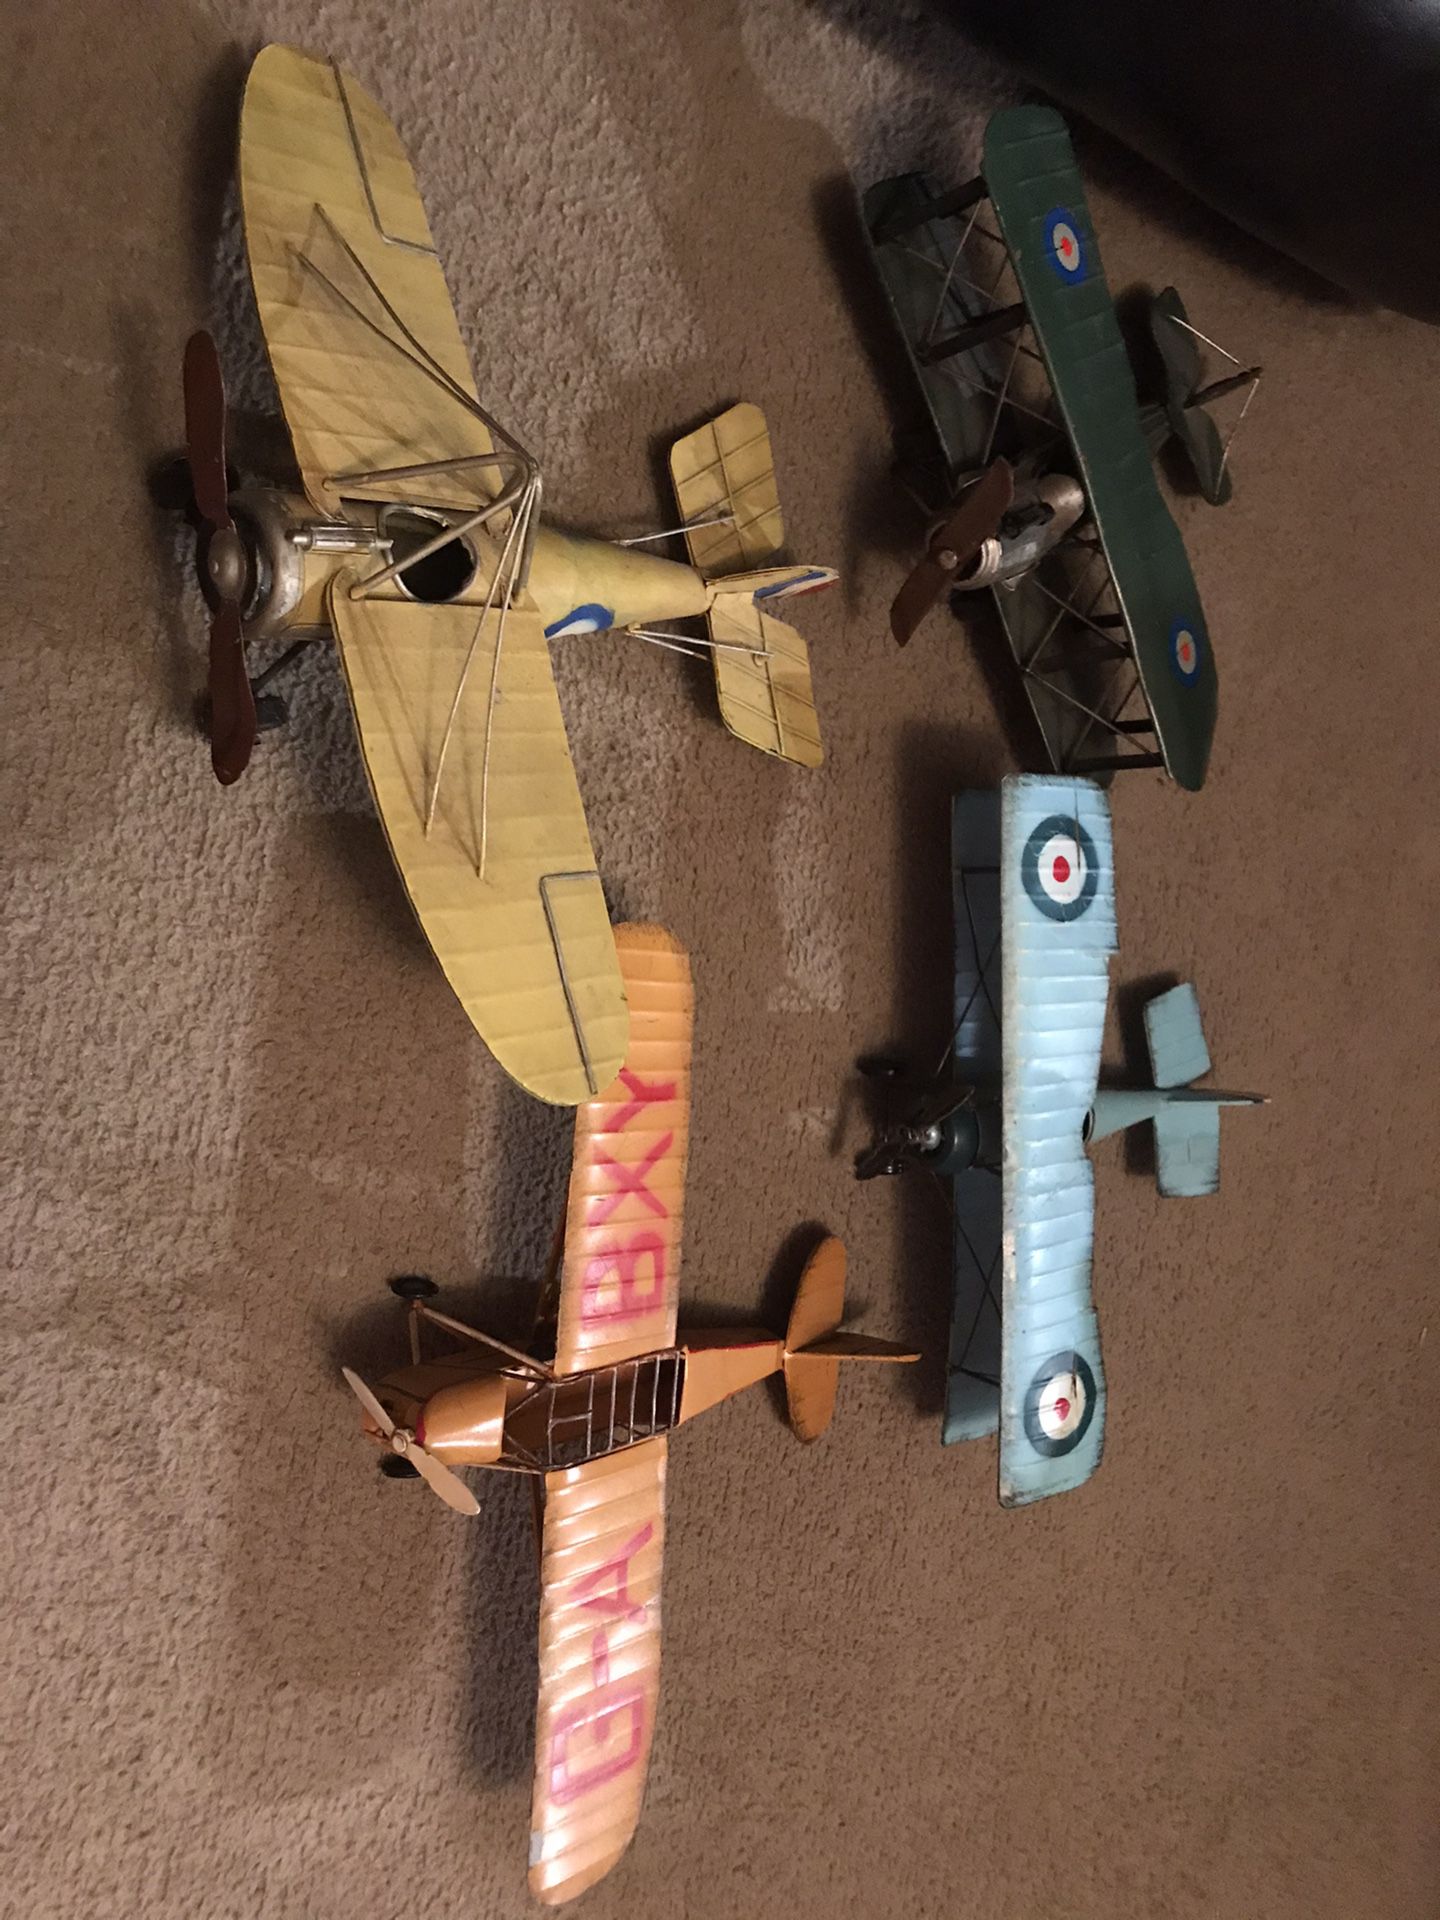 Old looking airplanes